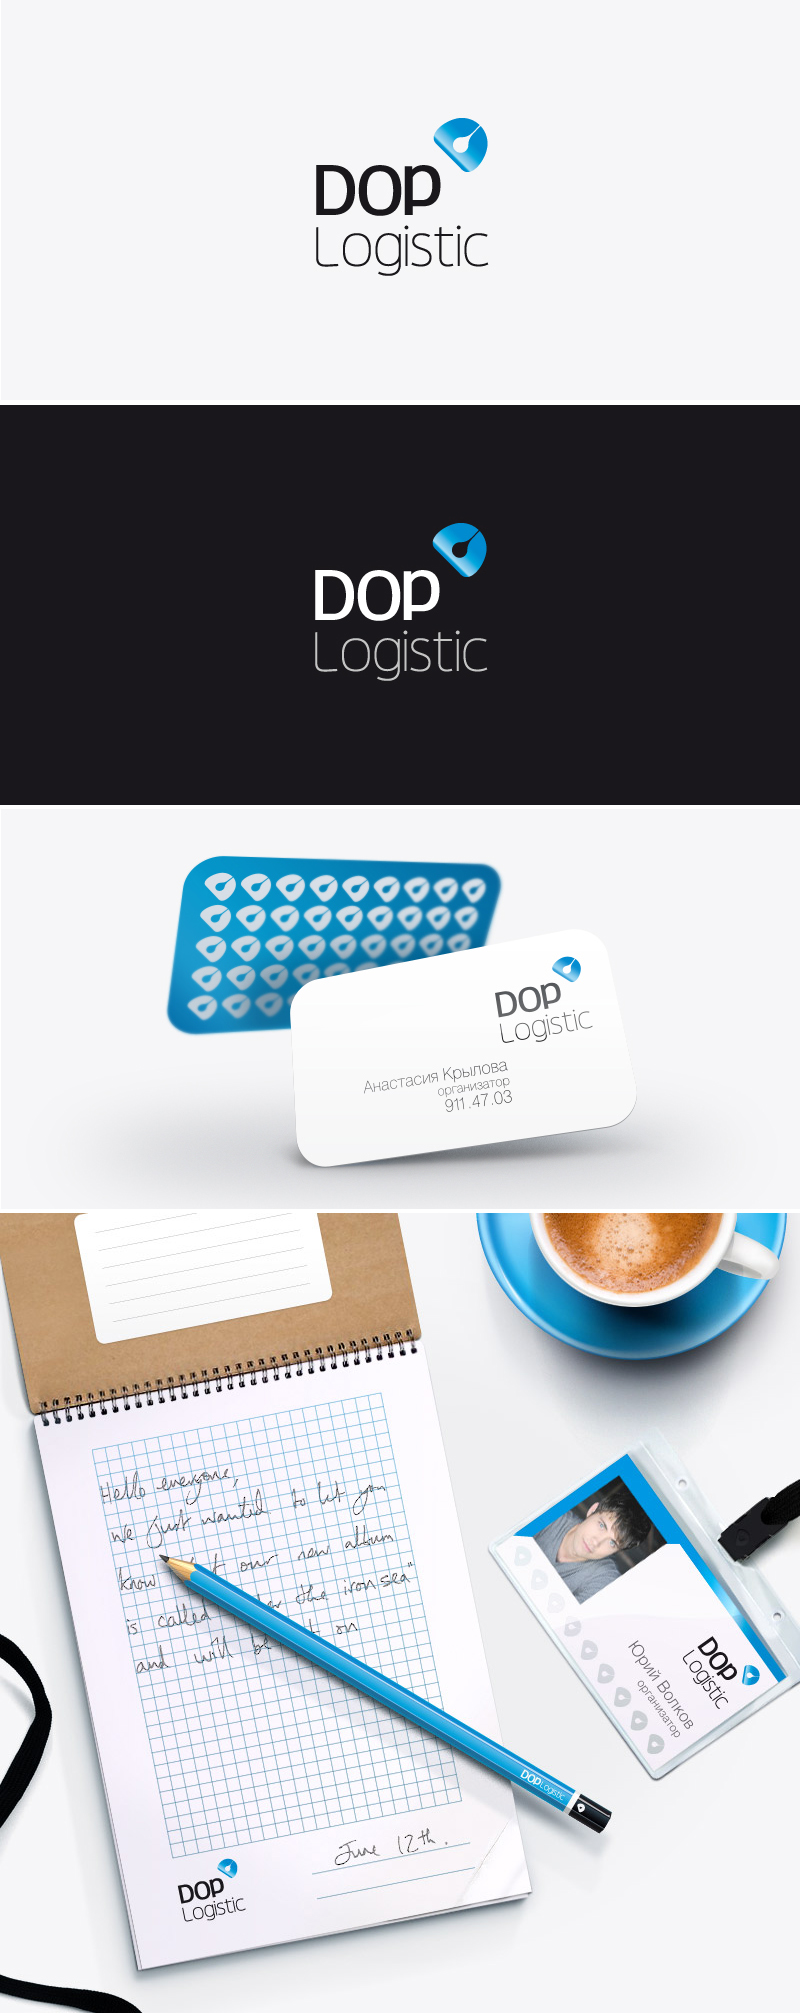 Dop Logistic